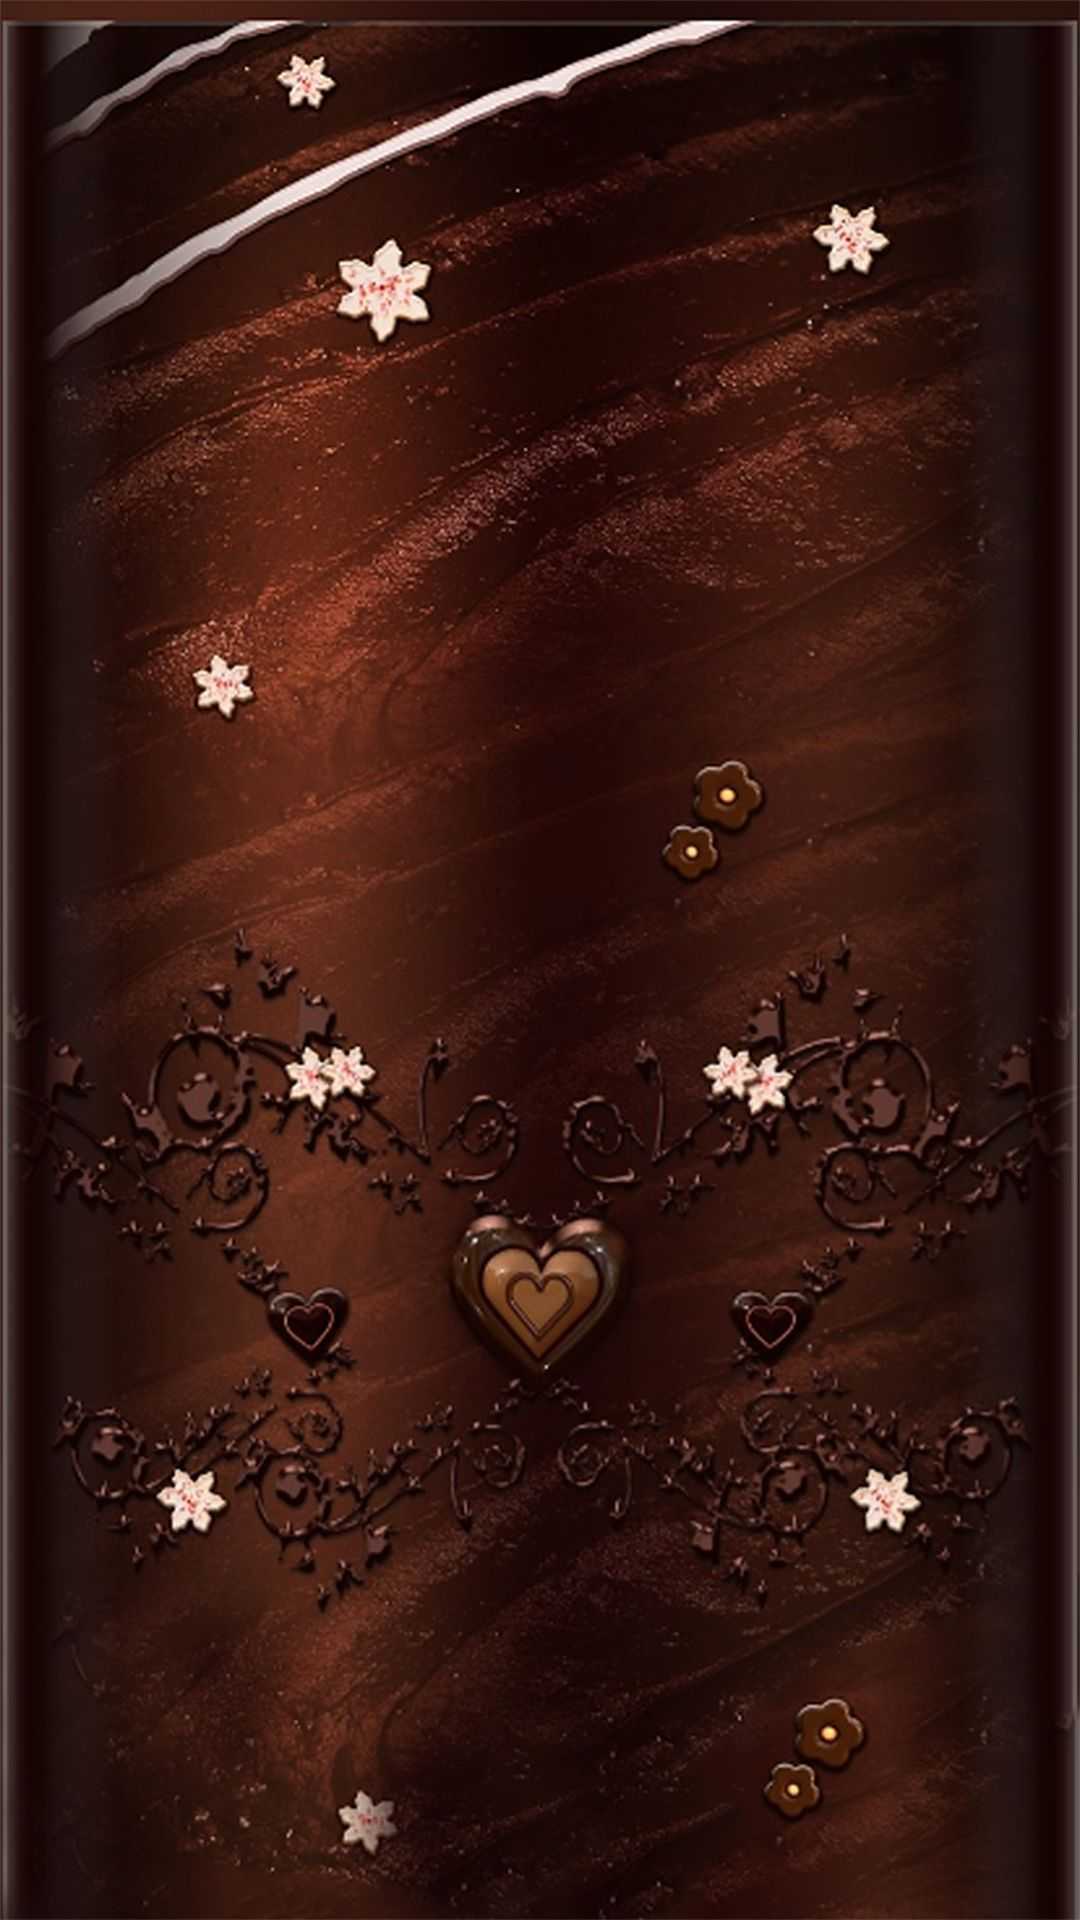 Brown Heart Iphone Wallpaper